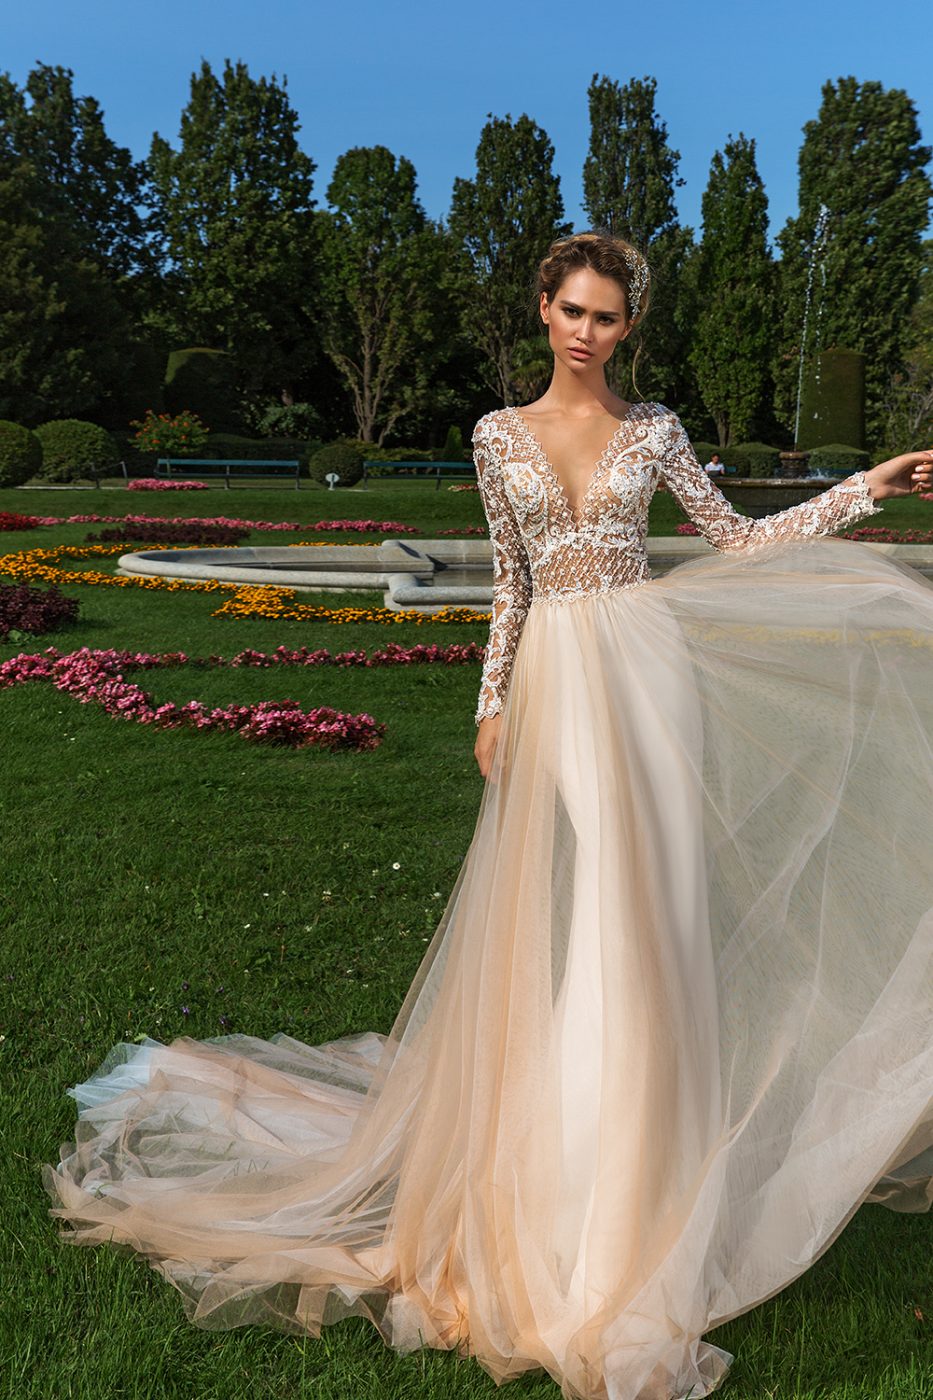 plunge neckline wedding dress by Crystal Design Couture